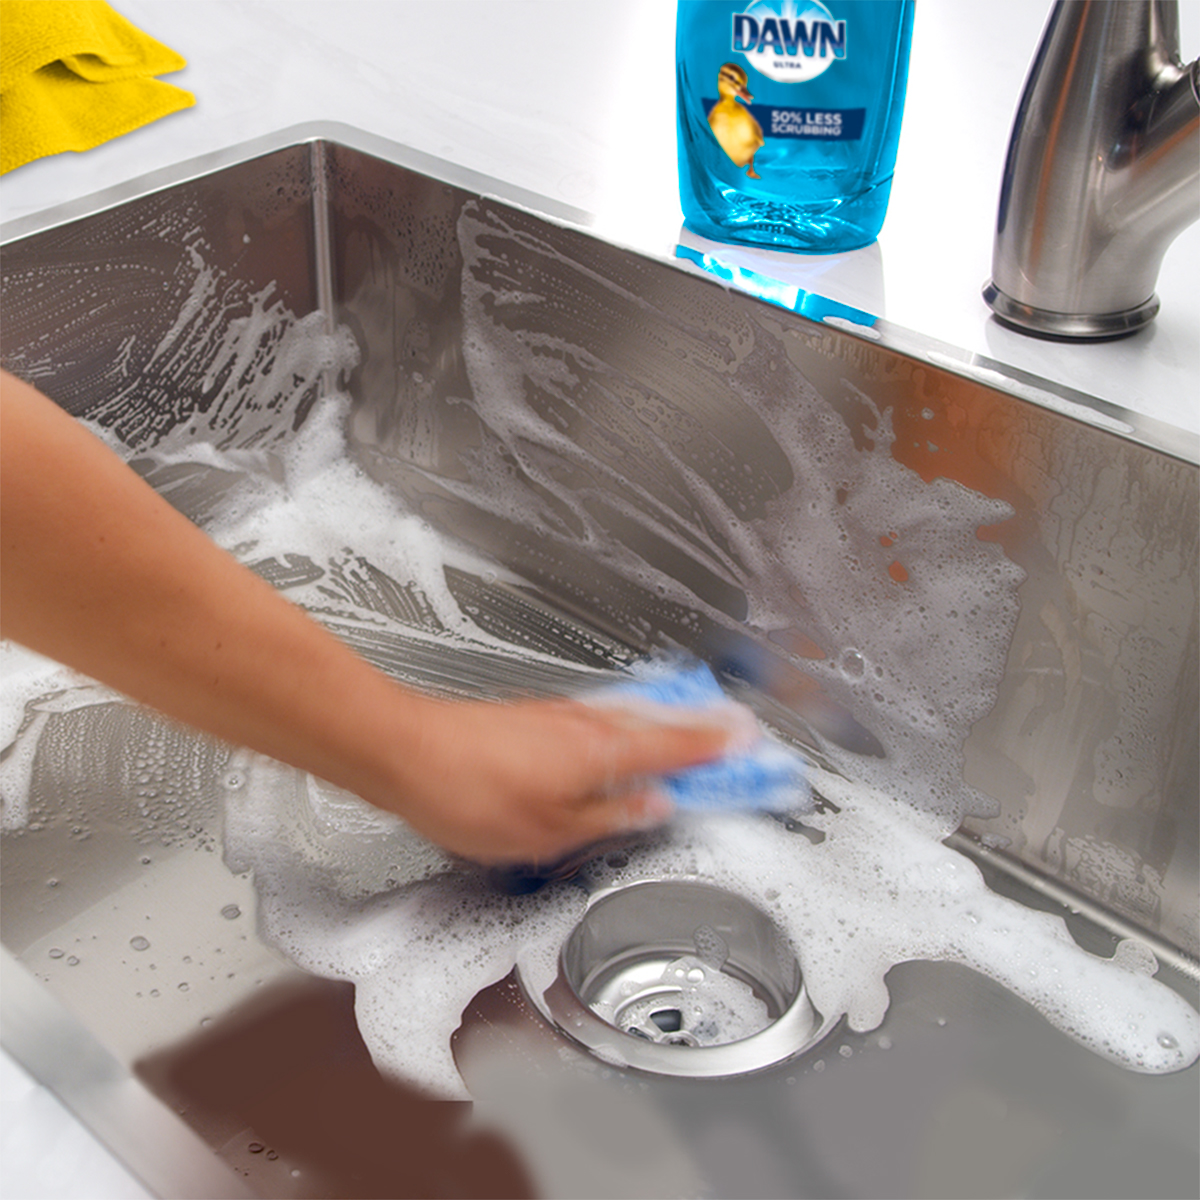 Dawn Ultra Dishwashing Liquid Dish Soap Original - 7.0 fl oz